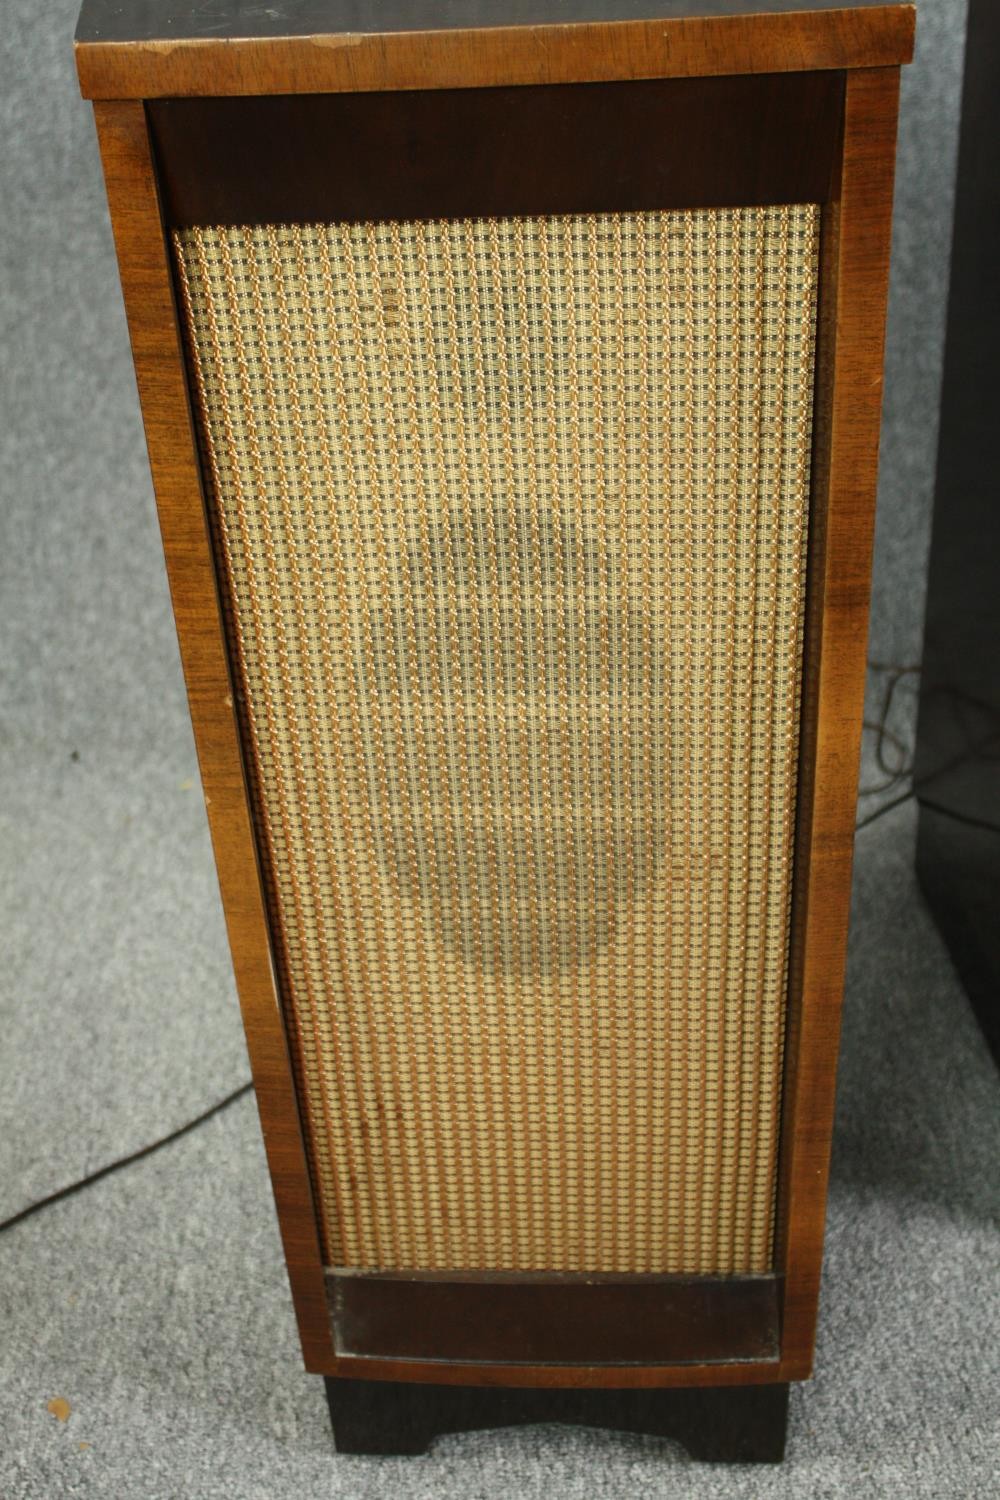 HMV radiogram, Garrard RC.121, mid century burr walnut cased with matching speakers. H.86 W.61 D. - Image 14 of 22